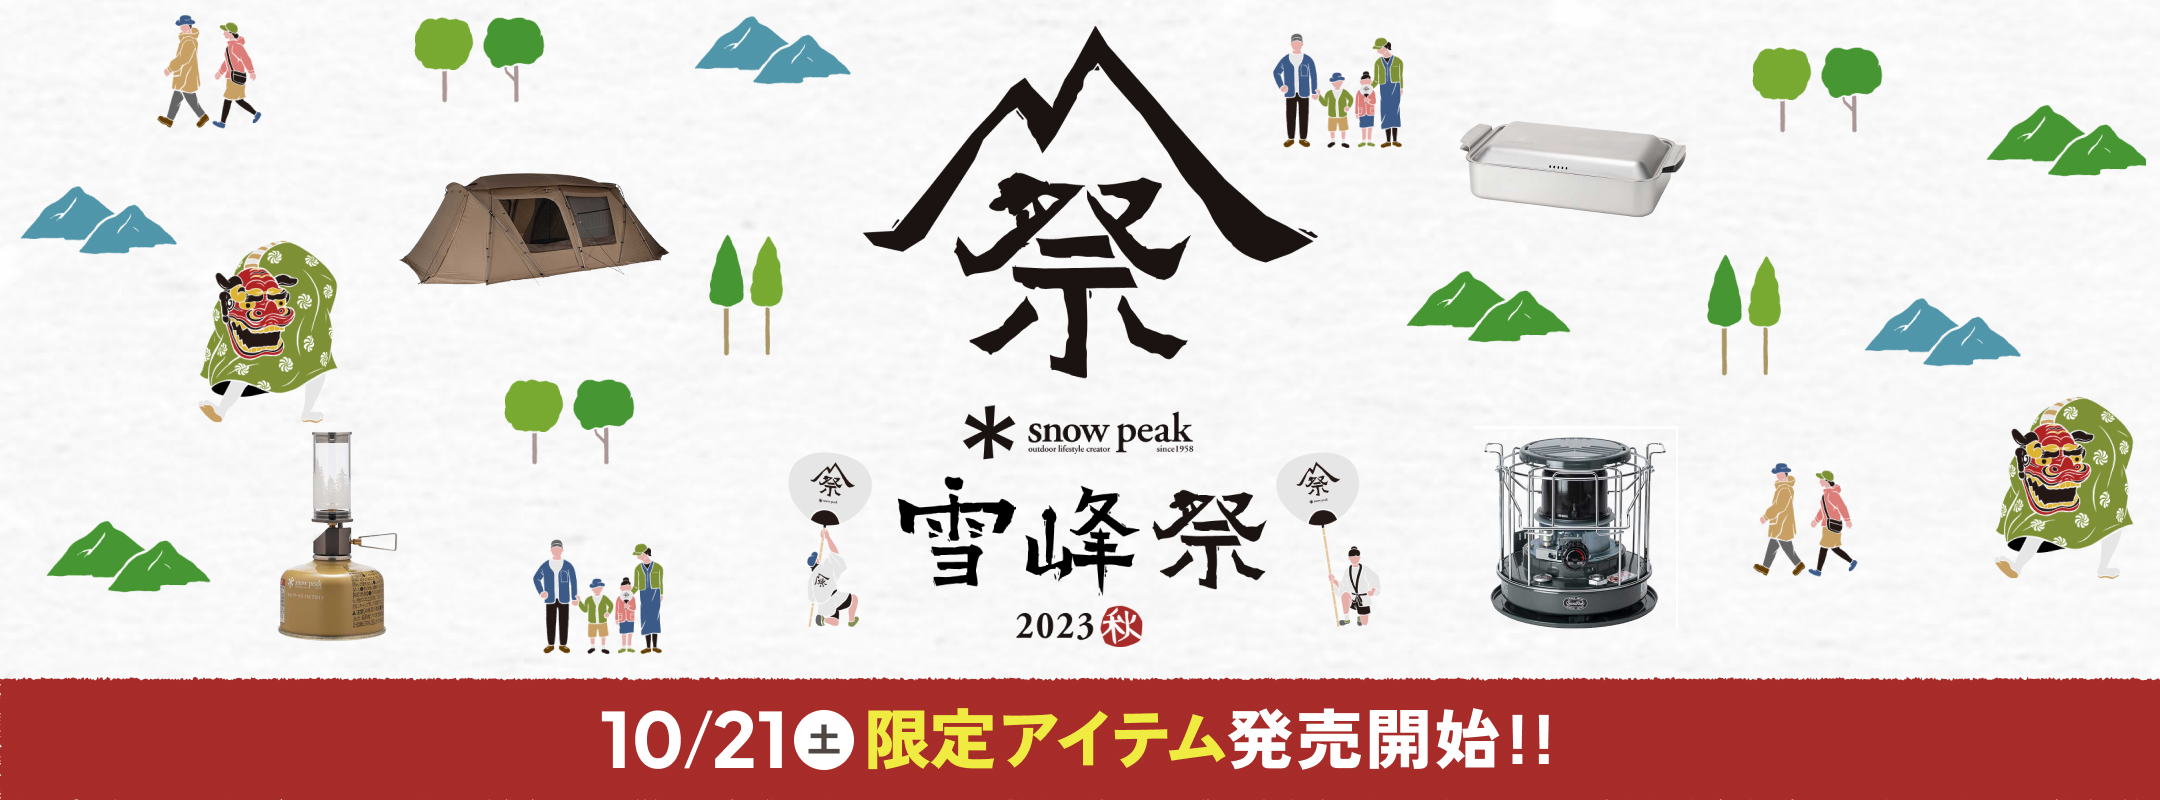 snow peak 雪峰祭 2023秋冬